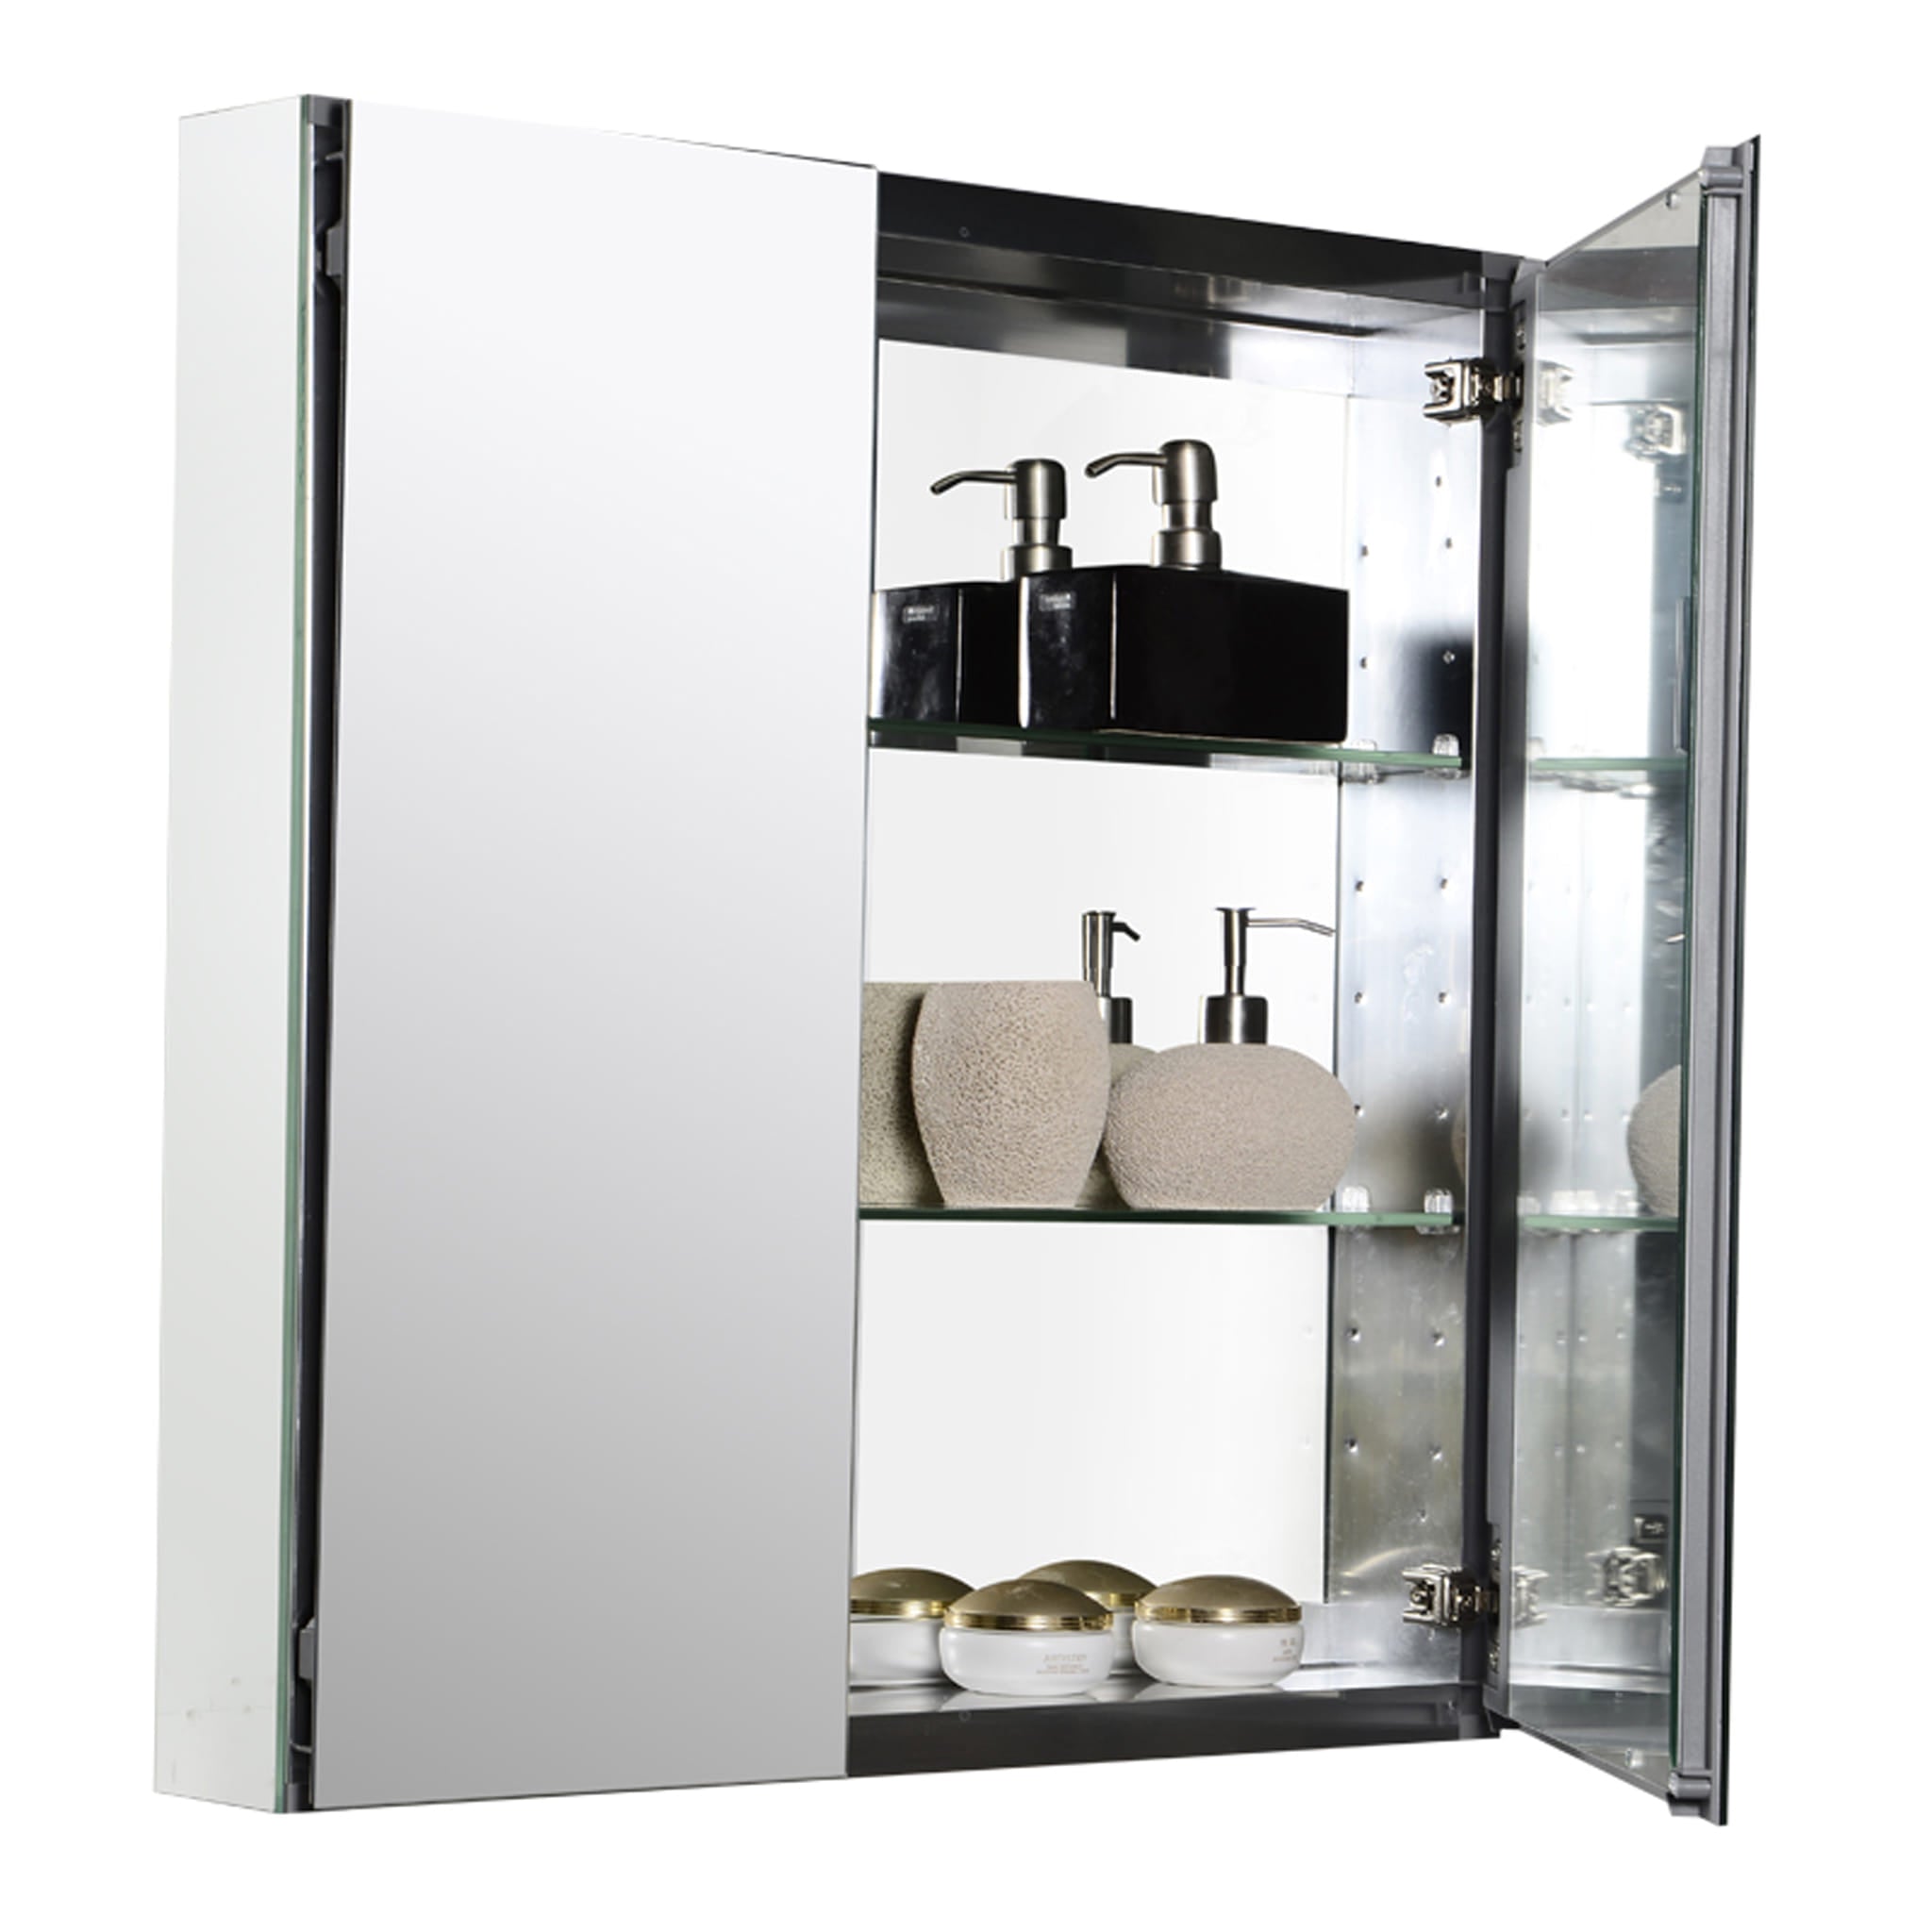 Aquamoon MM20 Frameless Plain 25" x26" Bathroom Medicine Cabinet Mirror Recess or Wall Mounted Installation